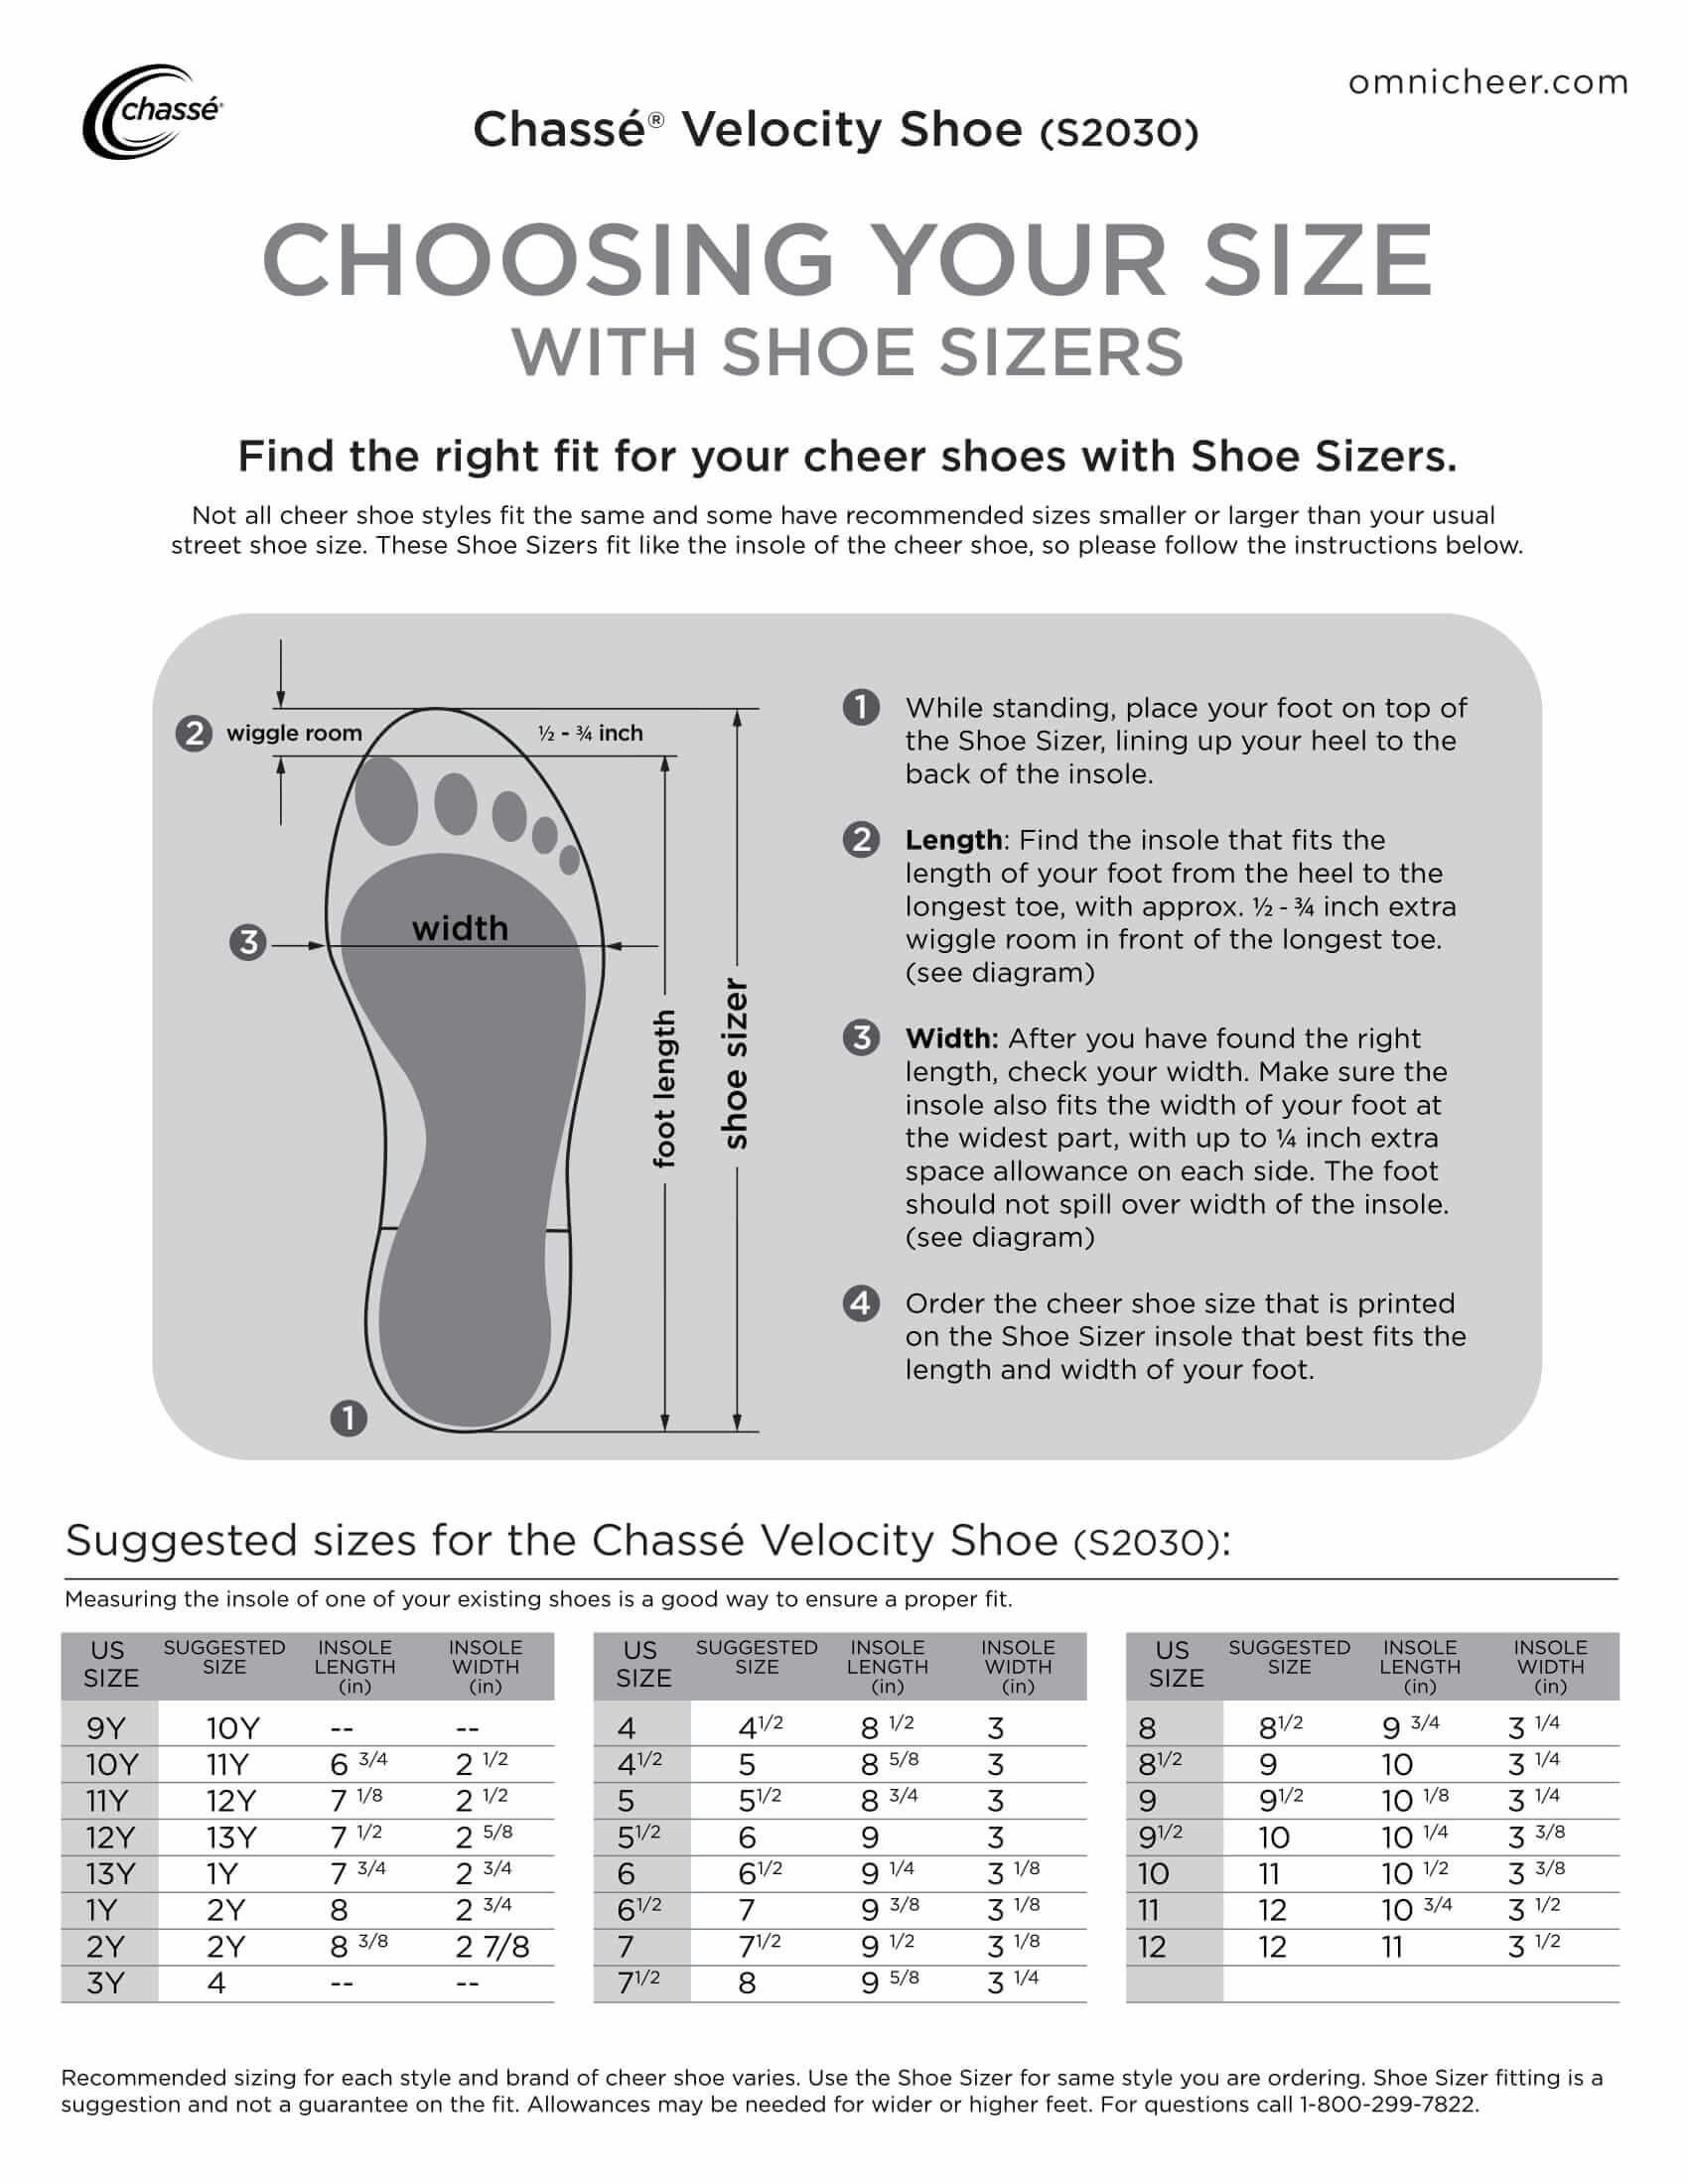 Shoe Sizer Fit Kit Info